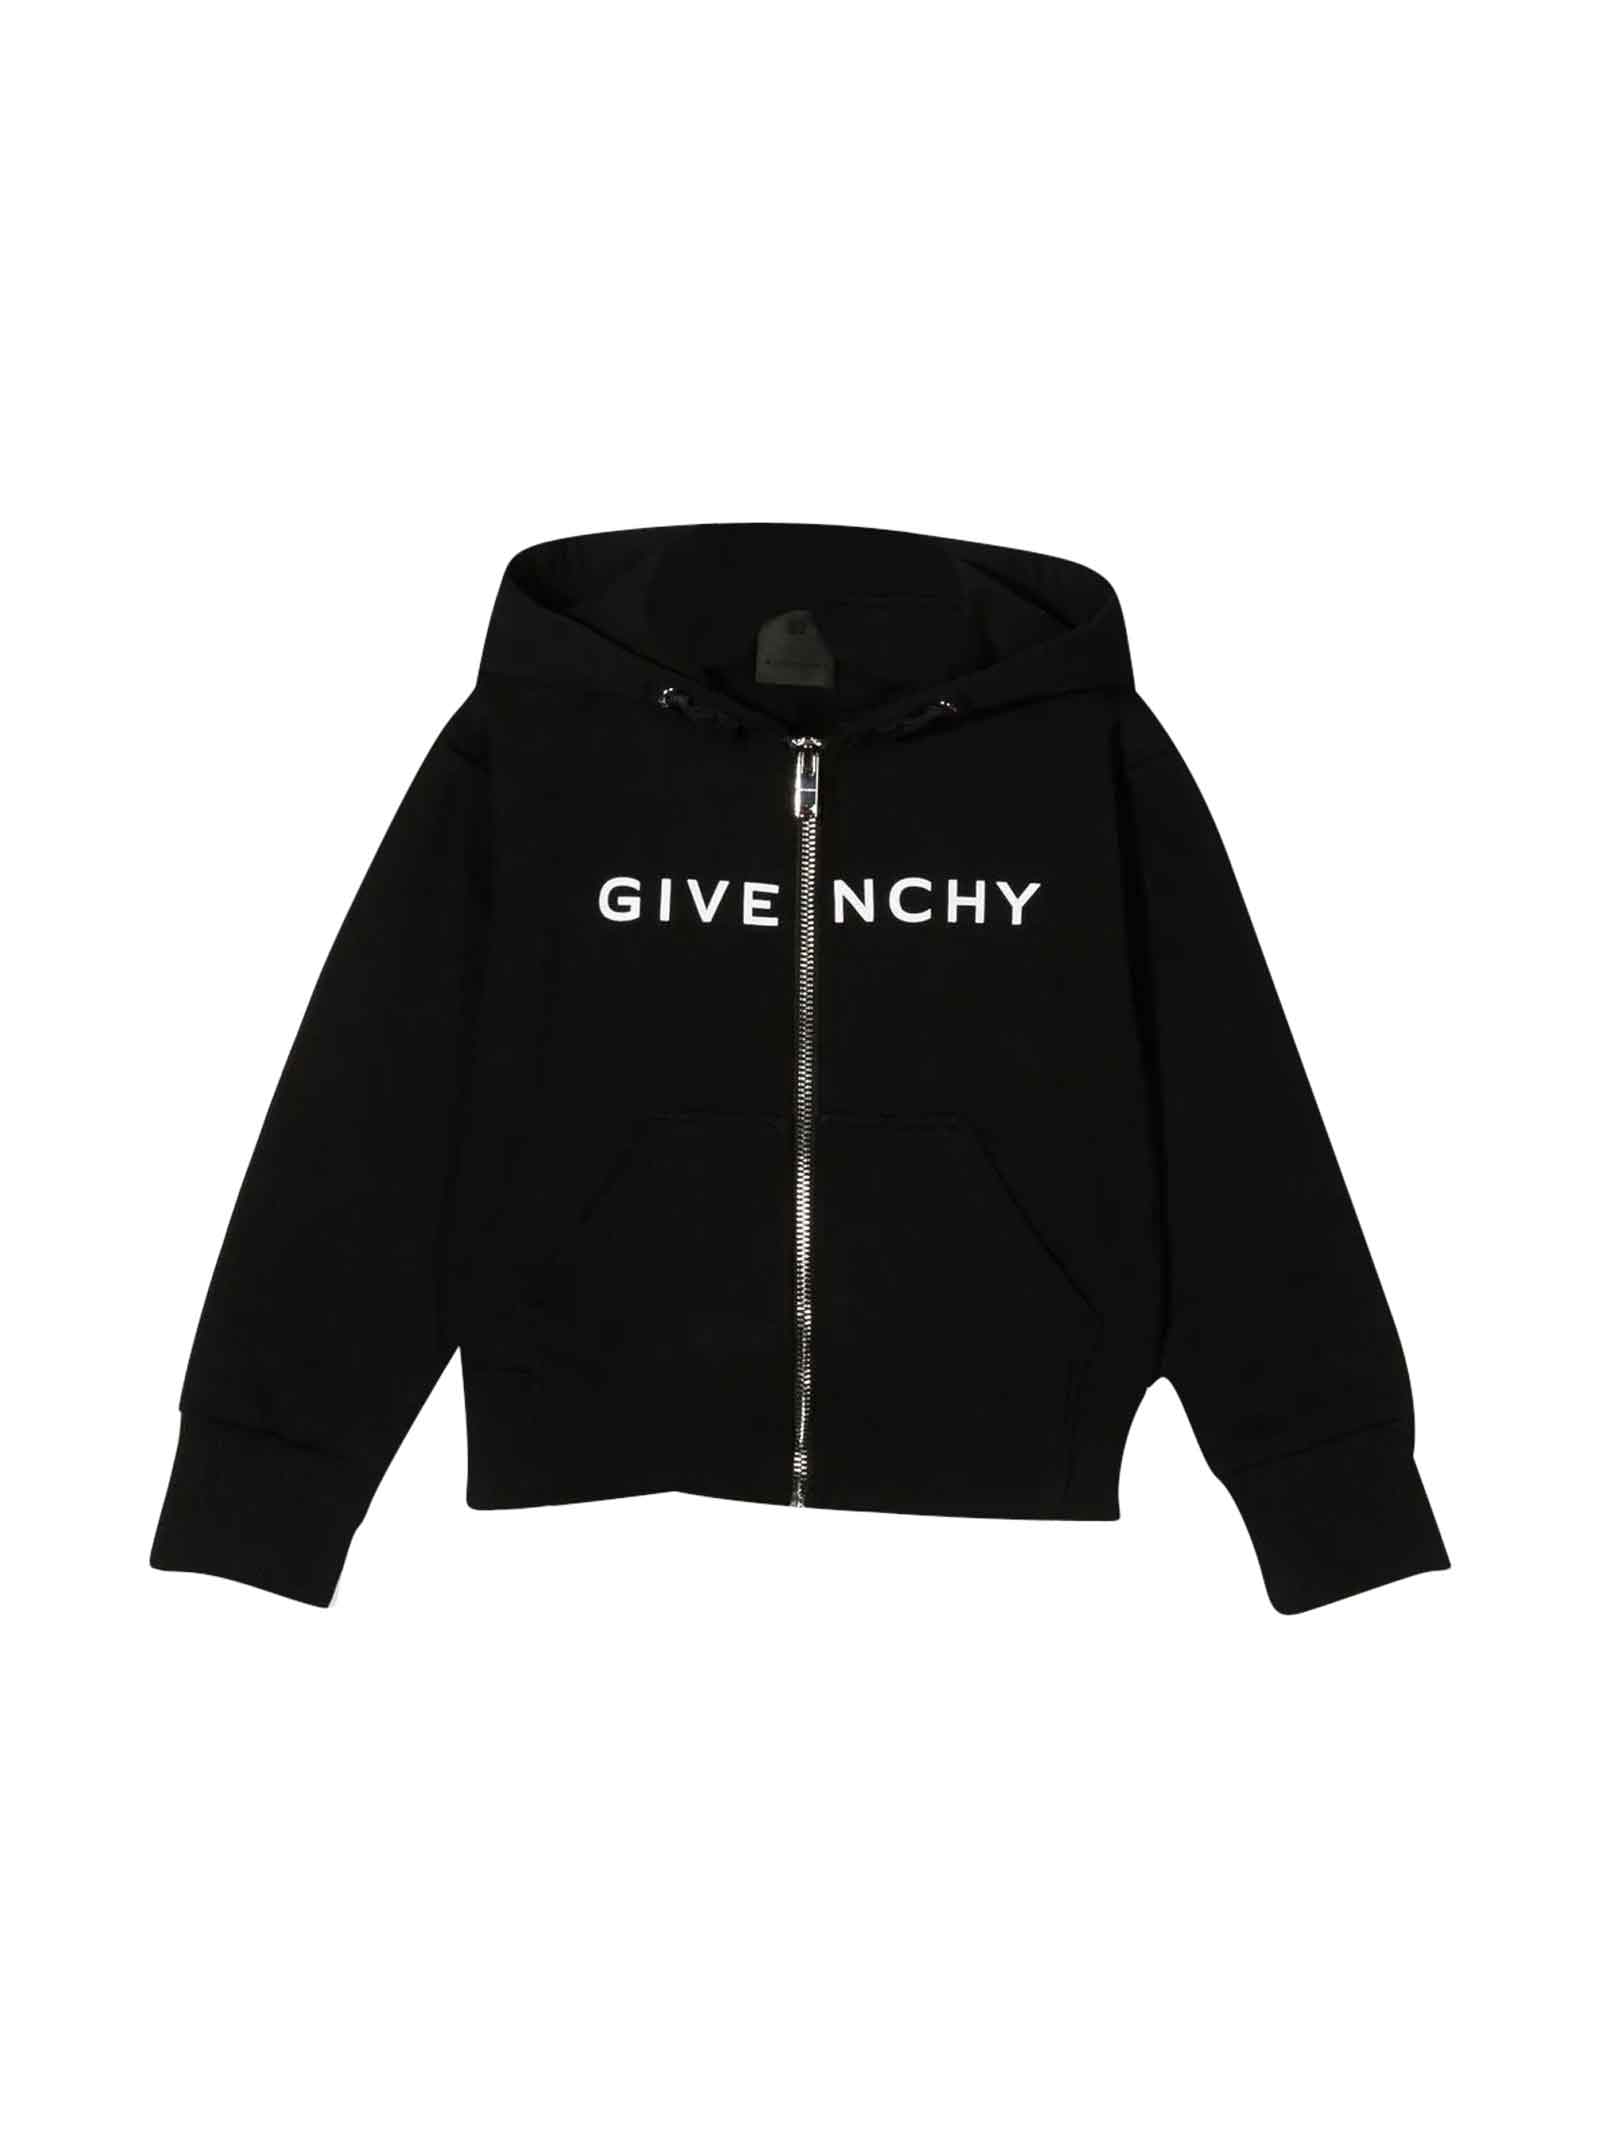 Givenchy Girl Sweatshirt With Print